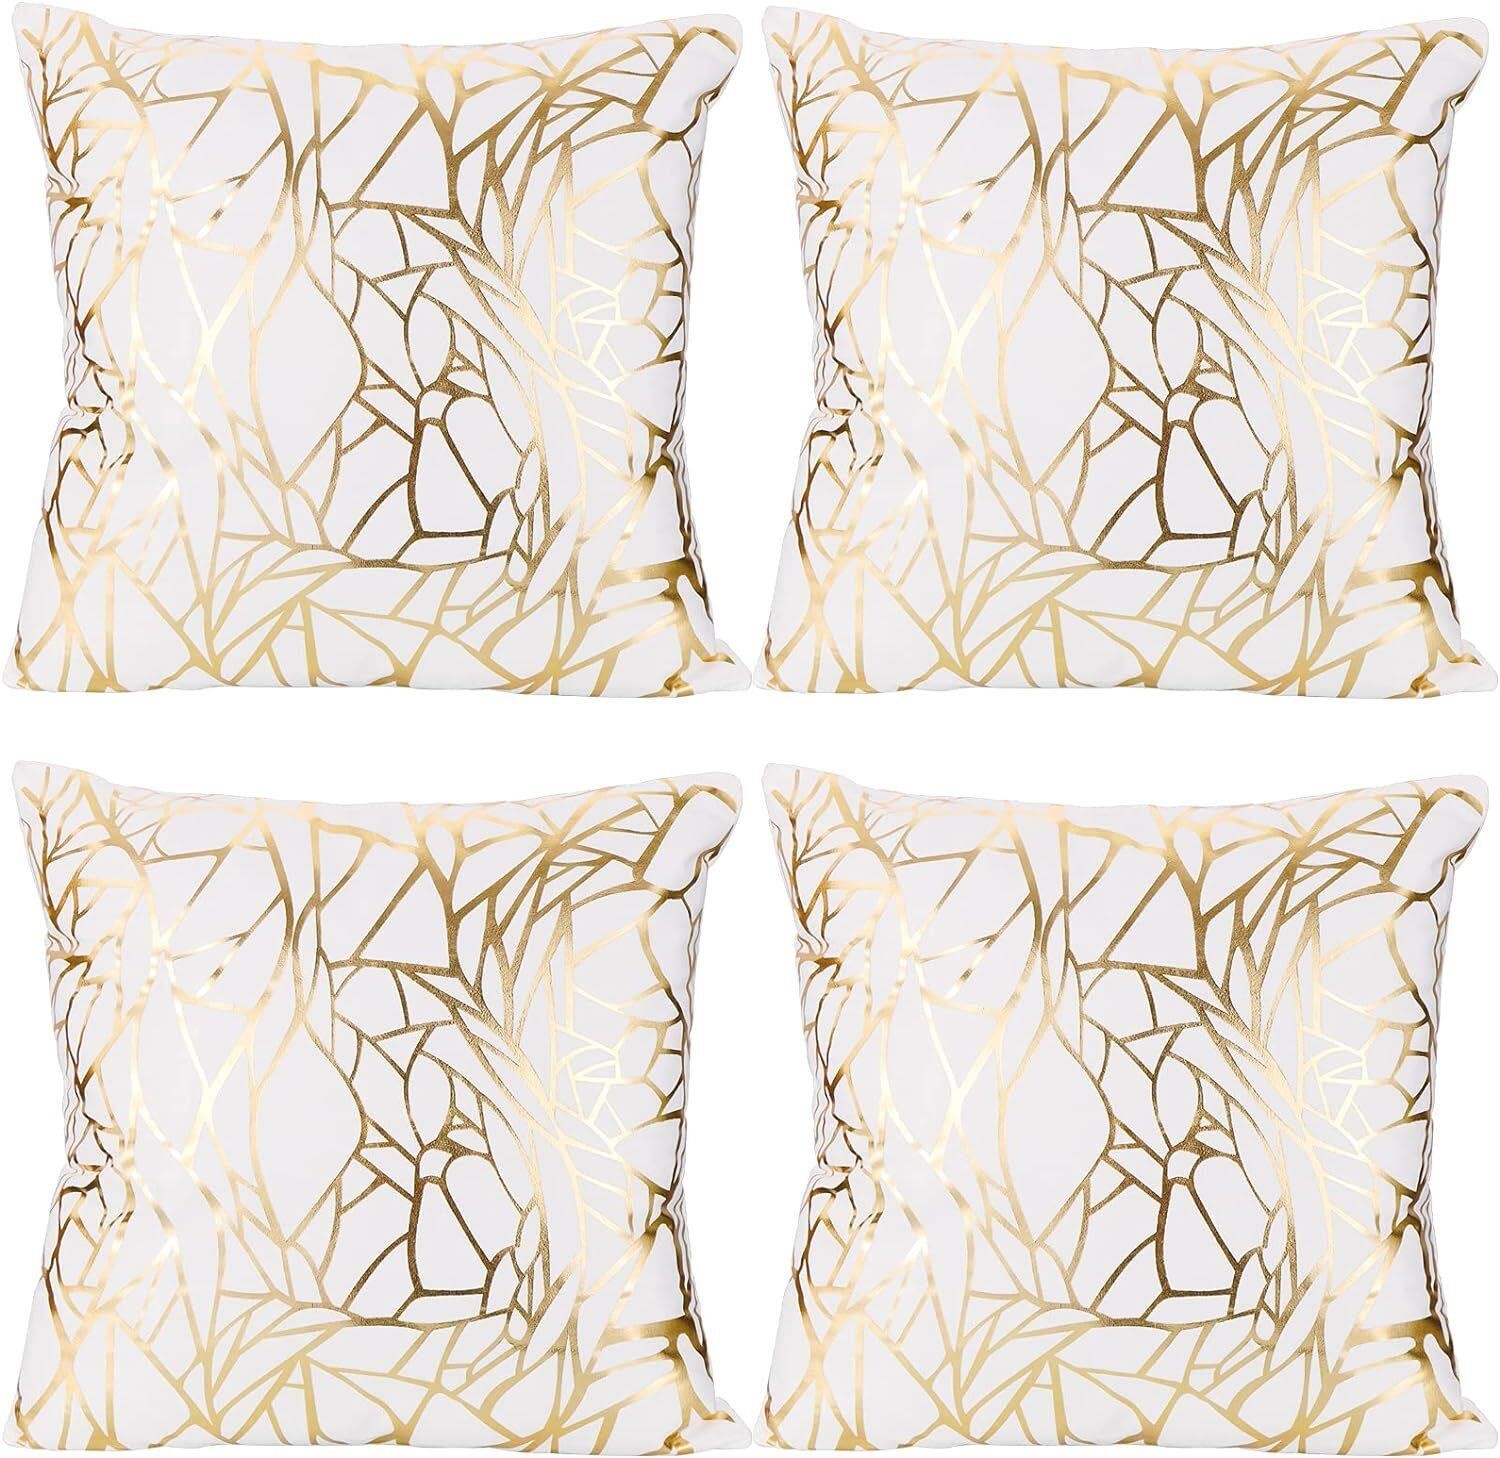 Vinerstar White Sofa Throw Pillow Covers 18 x 18 (